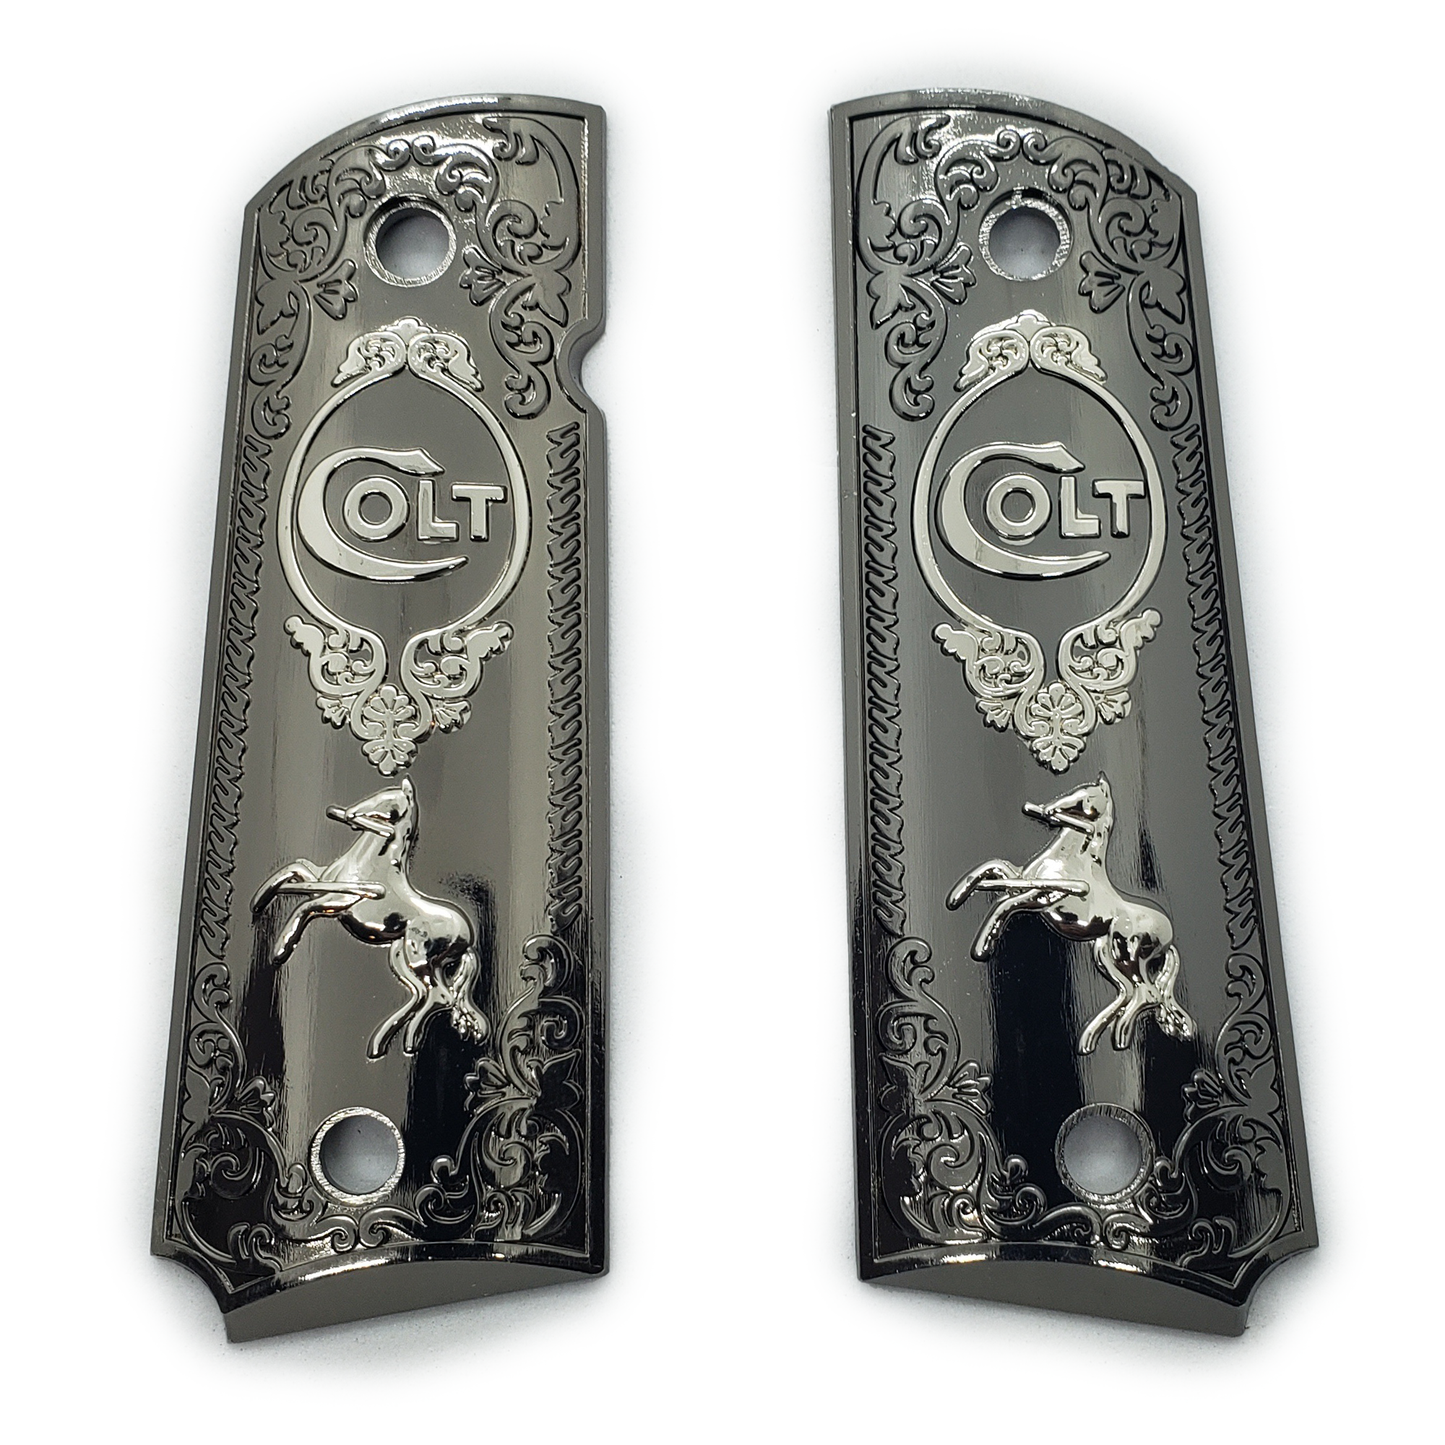 1911 Metal grips Black / Nickel Colt Rampant Scrollwork Ambi Safety #T-C601